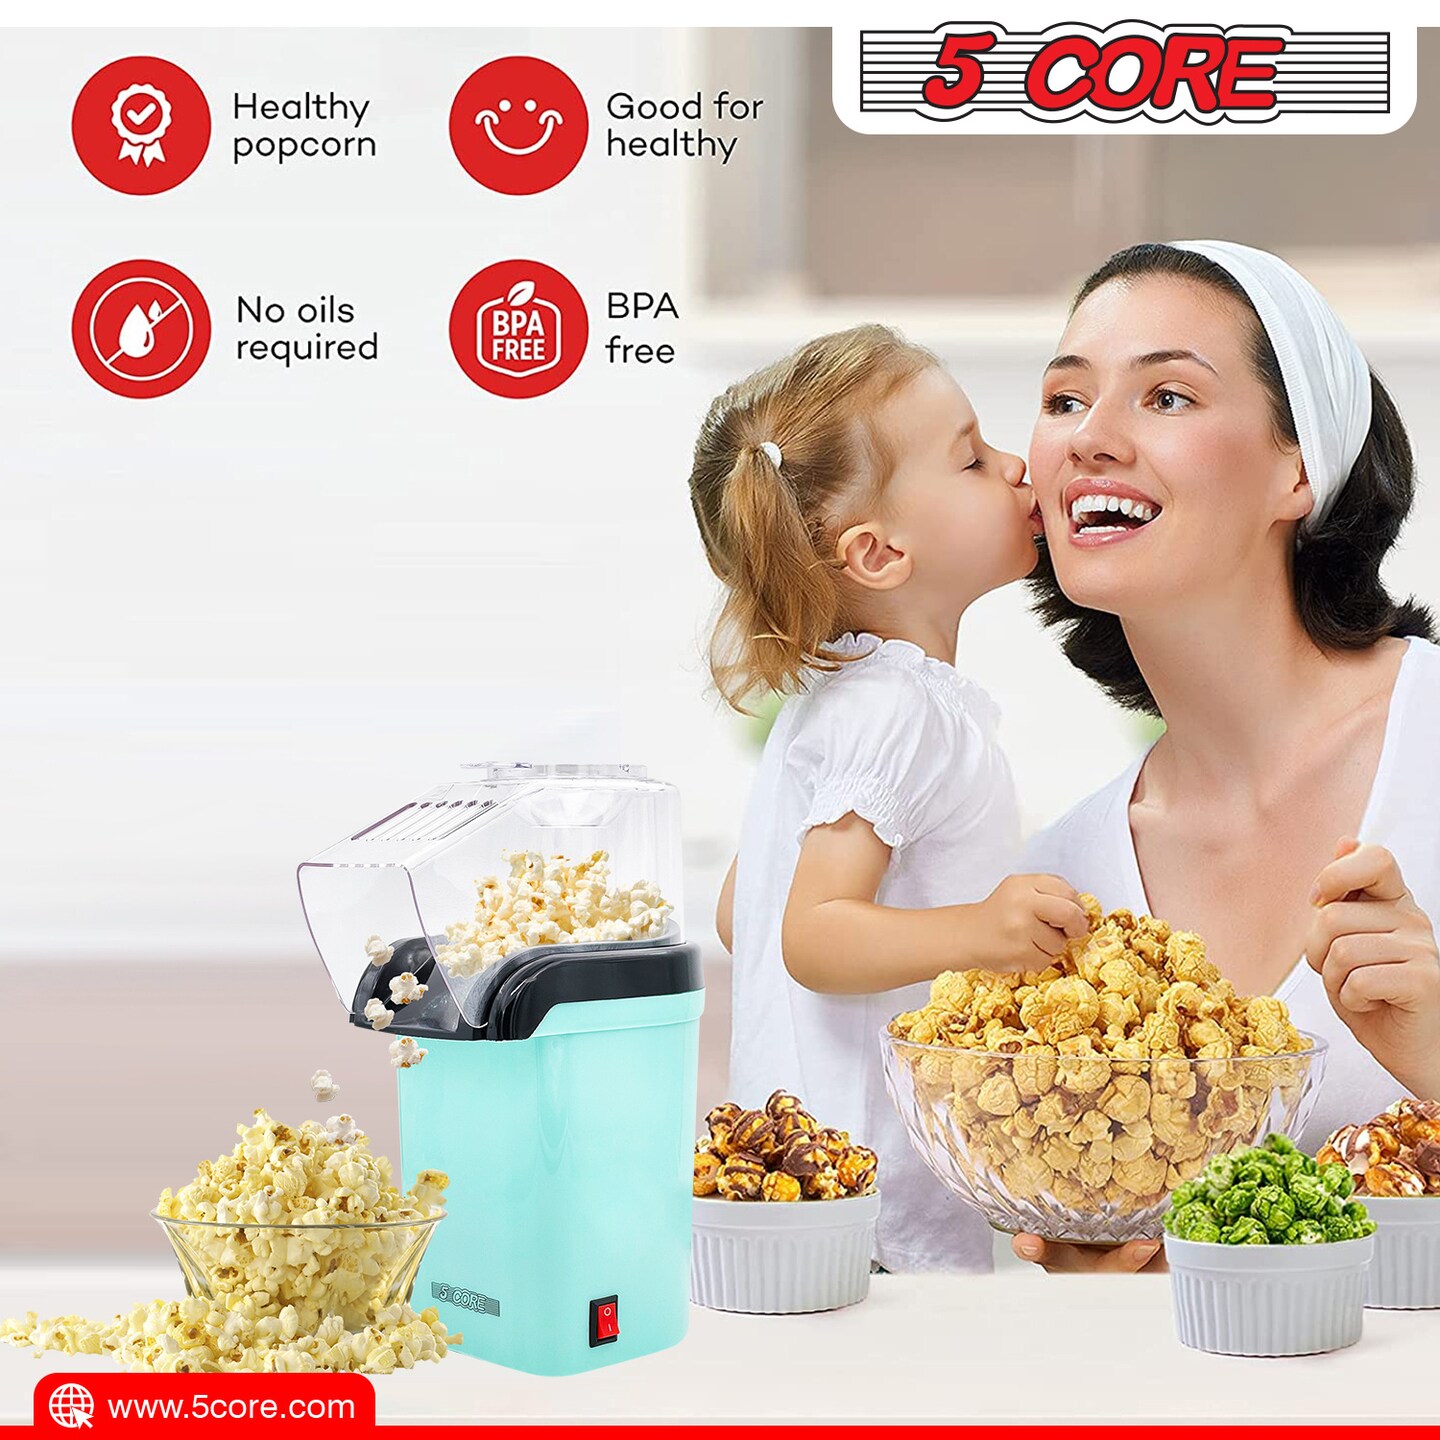 5 Core Hot Air Electric Popcorn Machine Popper Kernel Corn Maker BPA Free No Oil, Red